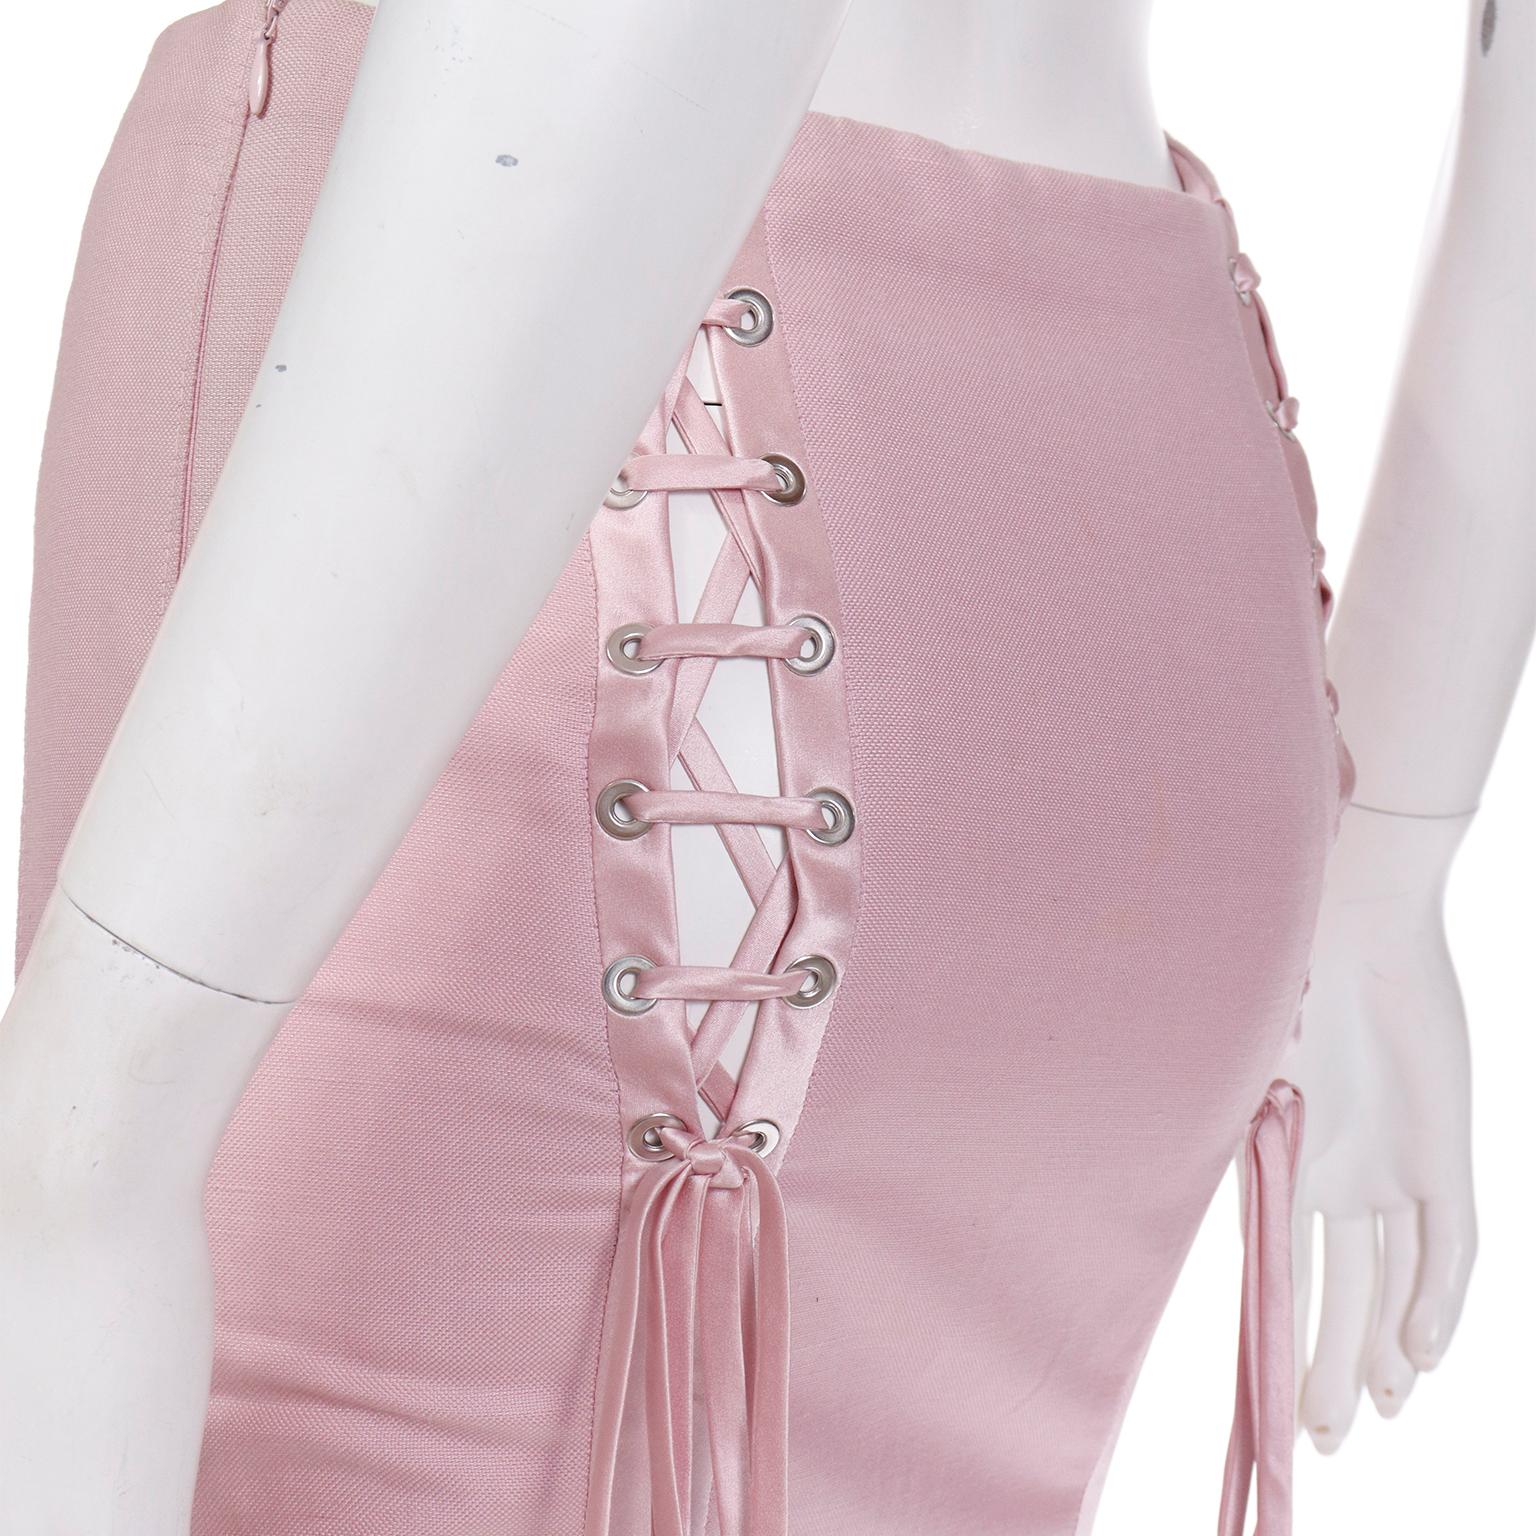 S/S 2004 Valentino Garavani Pink Corset Tied Runway Skirt For Sale 5